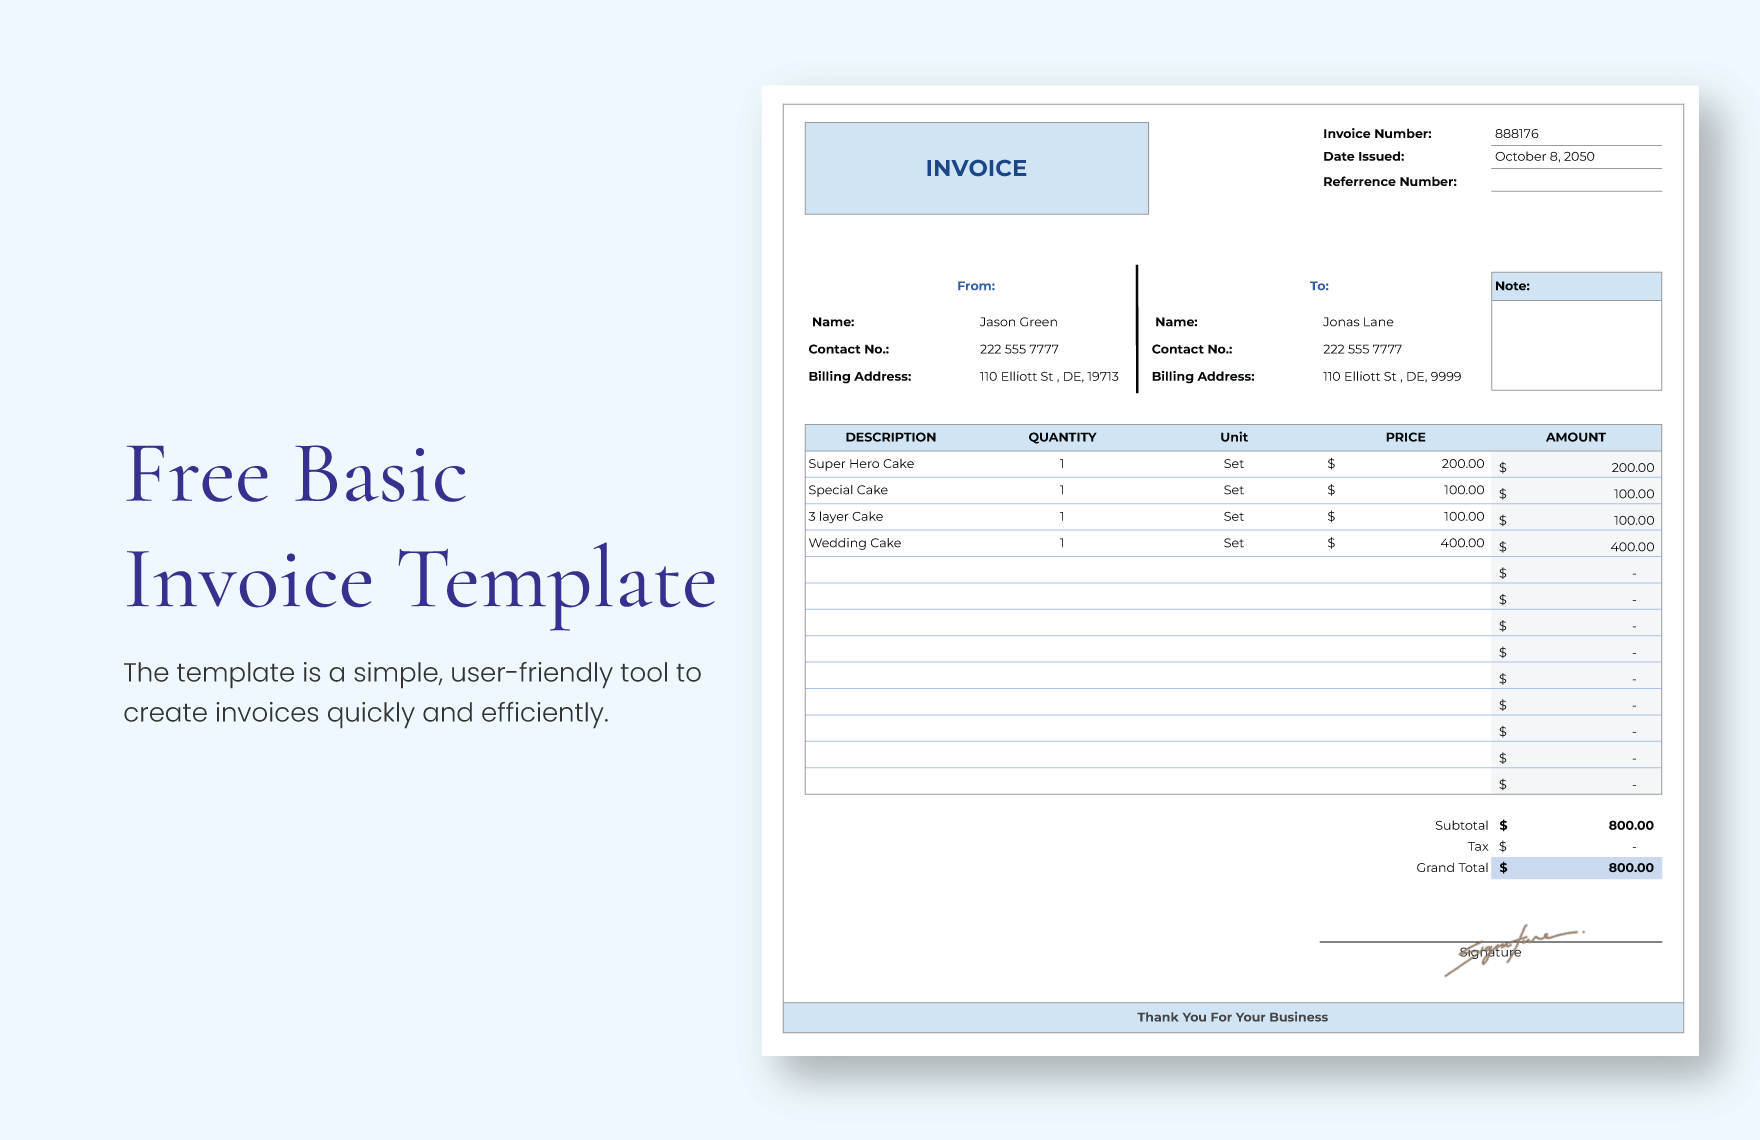 excel invoice templates